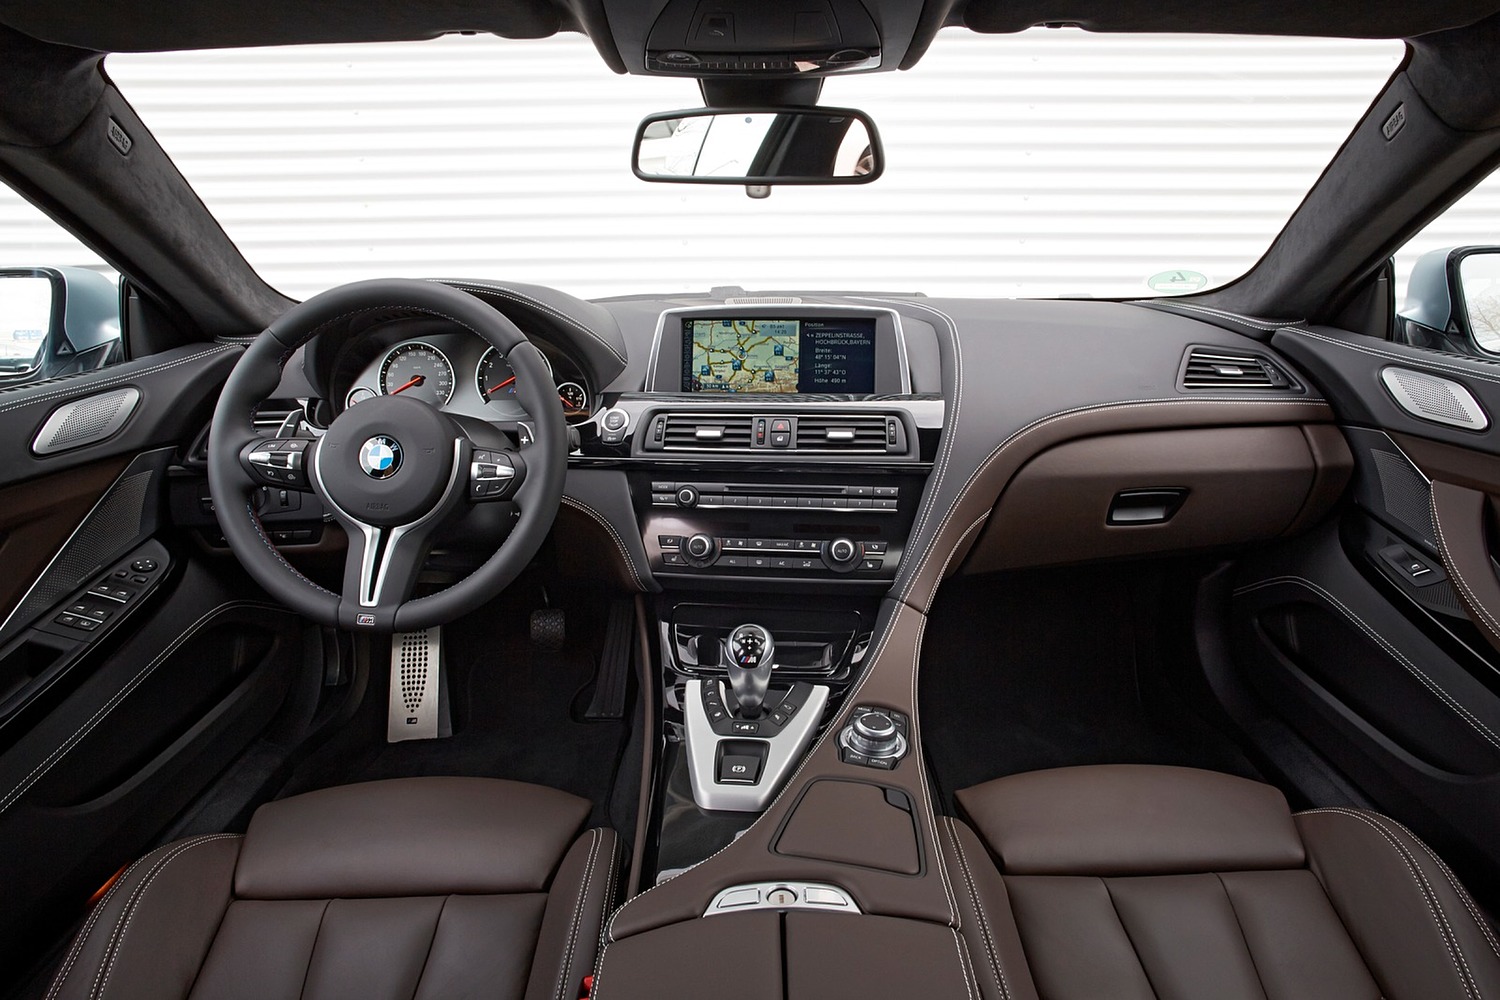 BMW M6 Gran Coupe Sedan Dashboard (2017 model year shown)